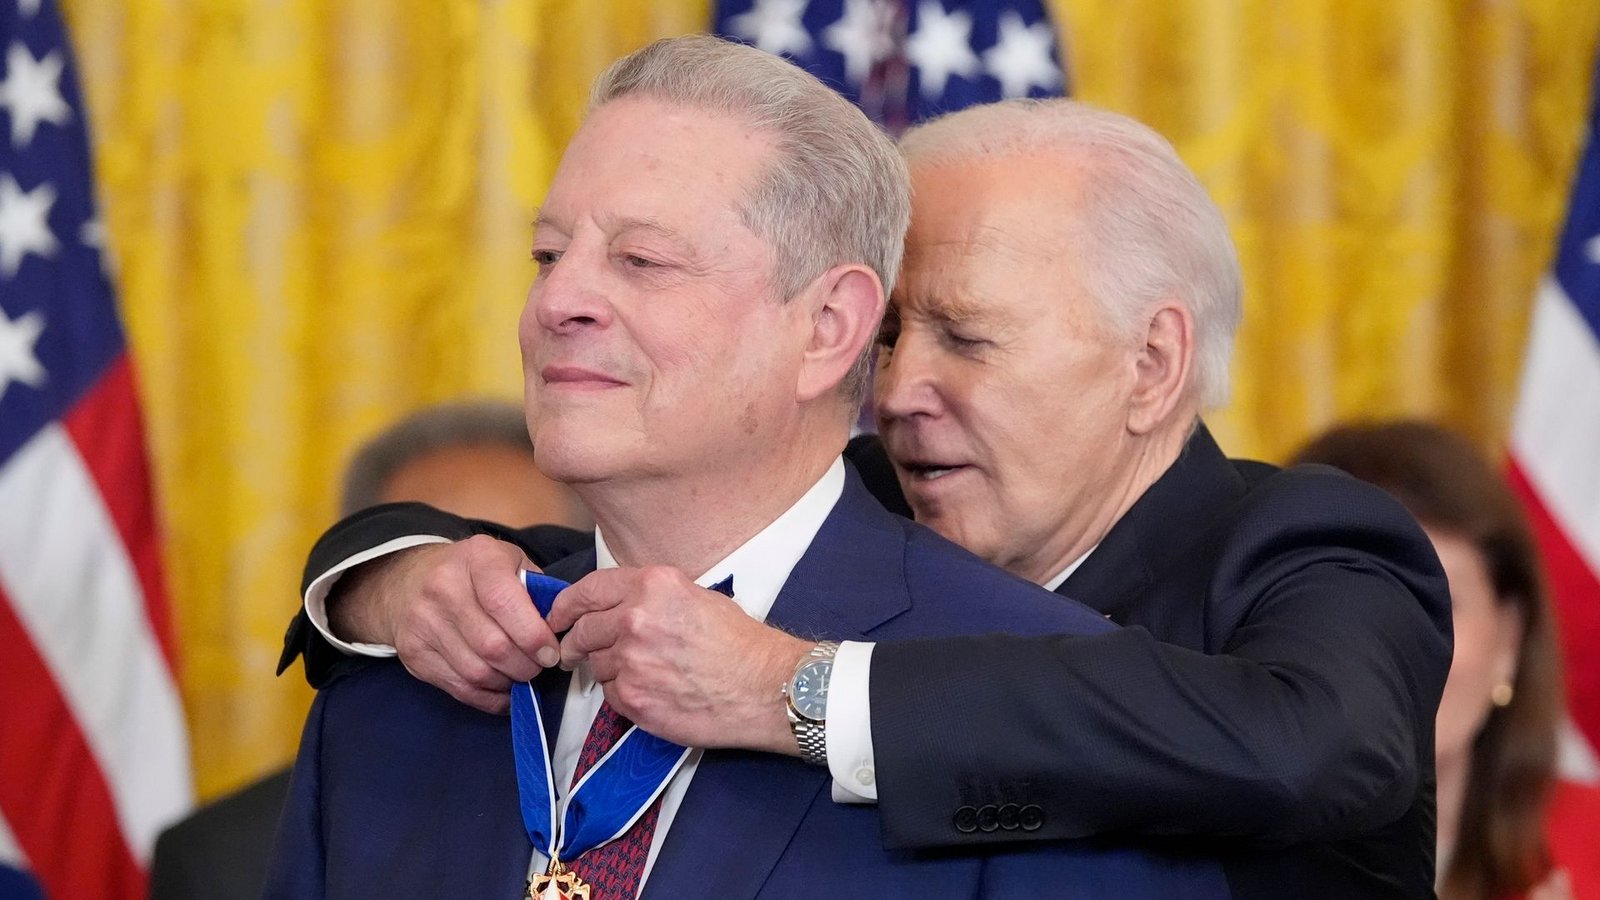 US-Präsident Joe Biden verleiht die Presidential Medal of Freedom an den ehemaligen US-Vizepräsidenten Al Gore.Foto: Alex Brandon/AP/dpa